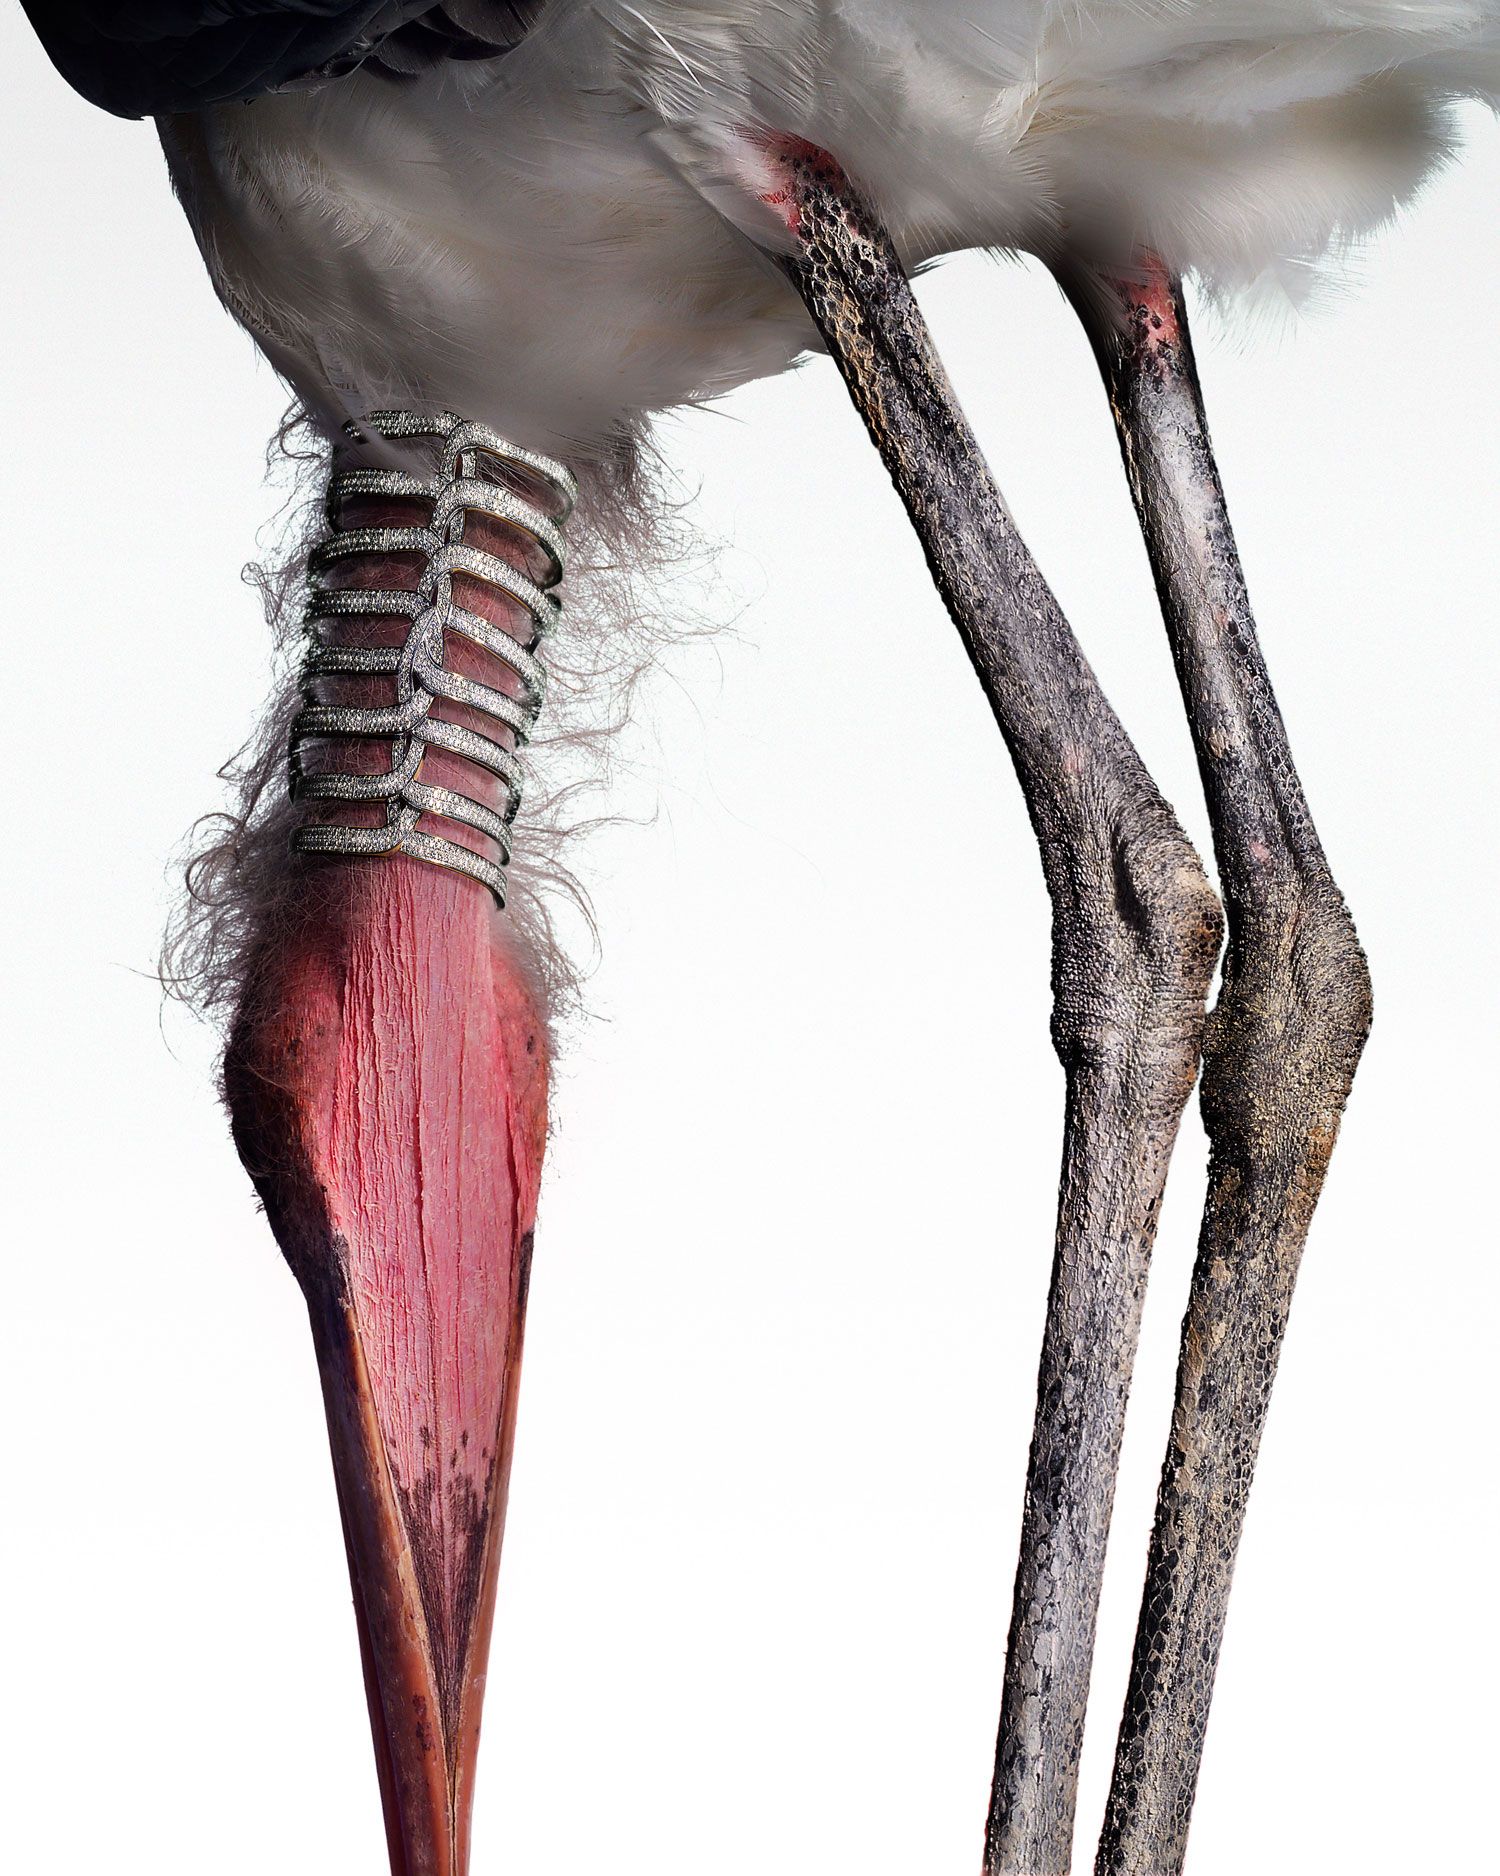 torkil gudnason animal jewelry ibis